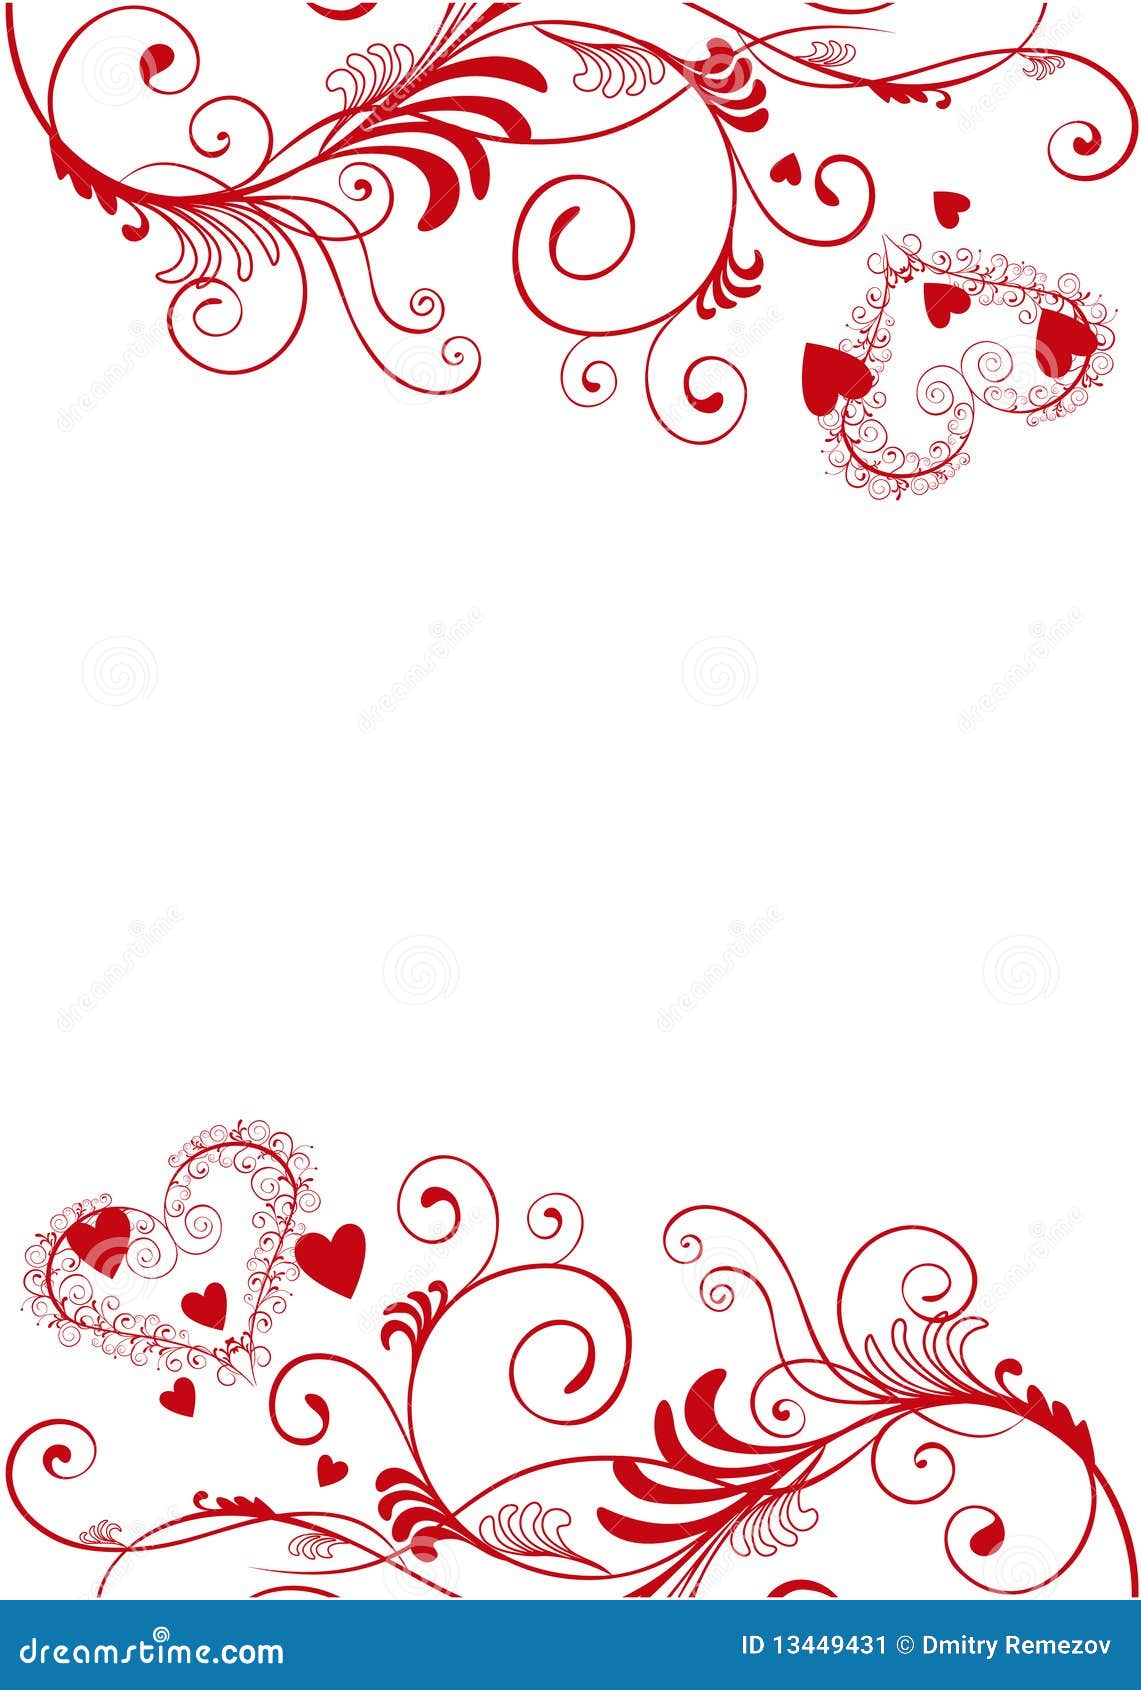 Valentine s day frame stock vector. Illustration of background - 13449431